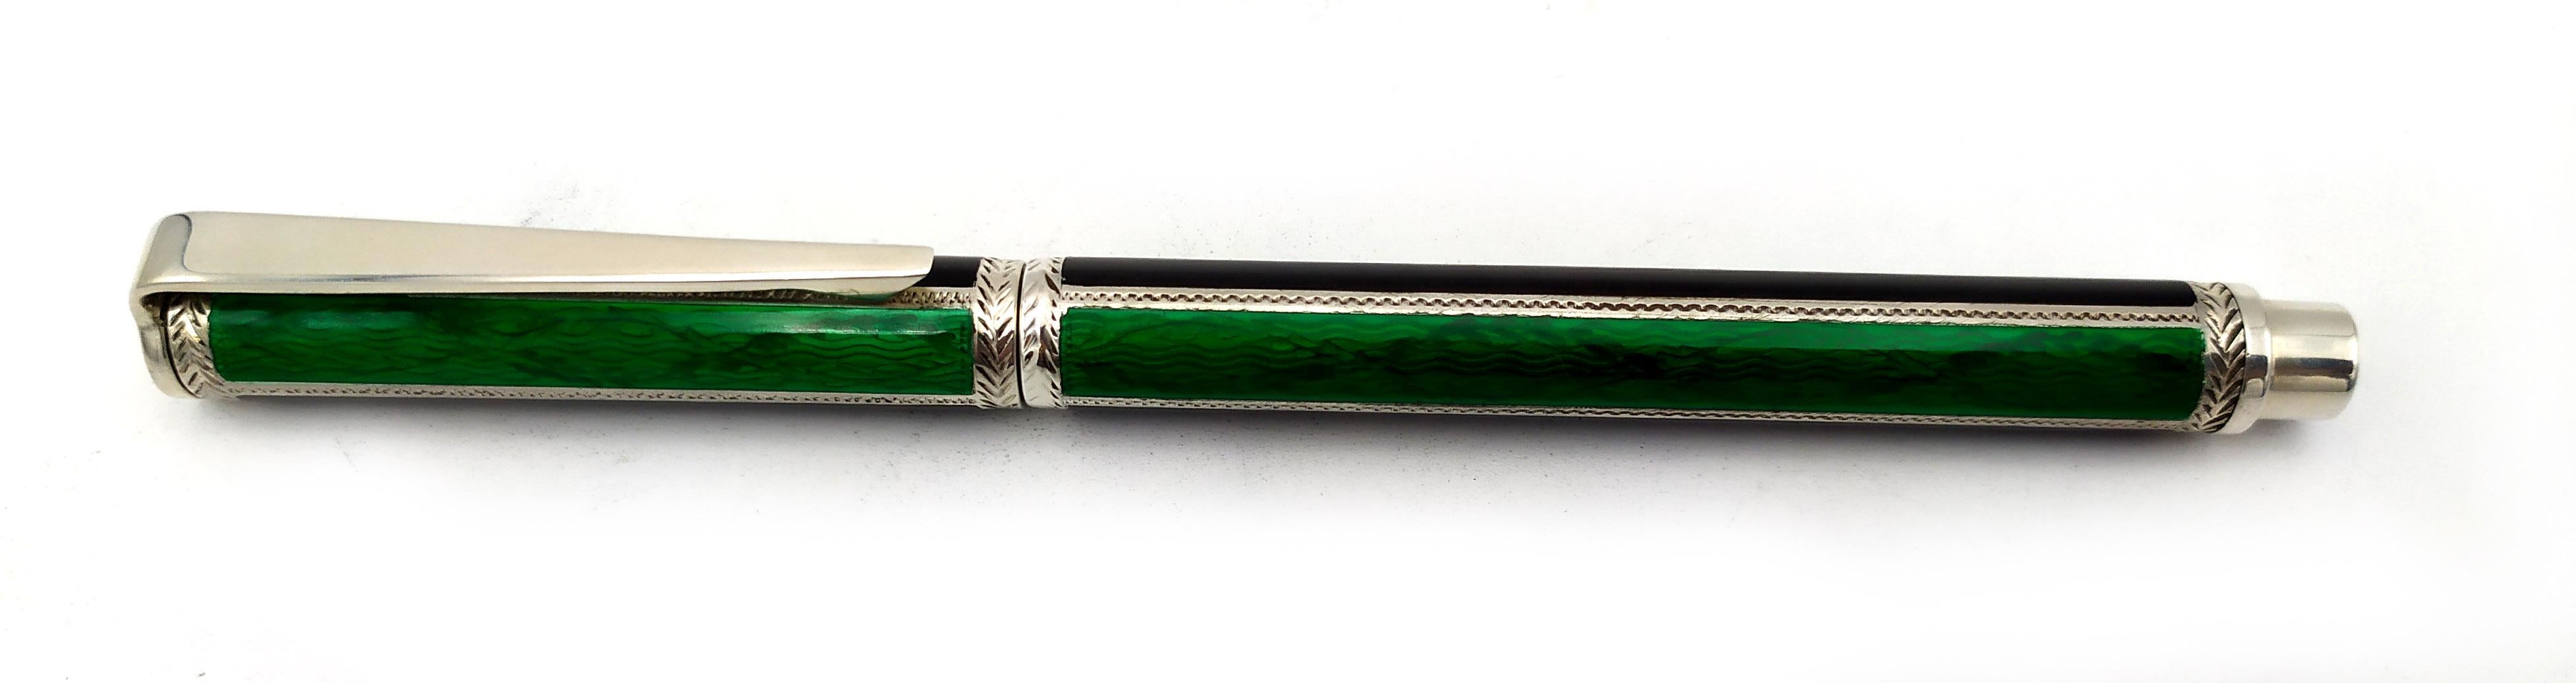 Fountain pen, Ballpoint pen and tray for a Desk Set green enamel Salimbeni  For Sale 3